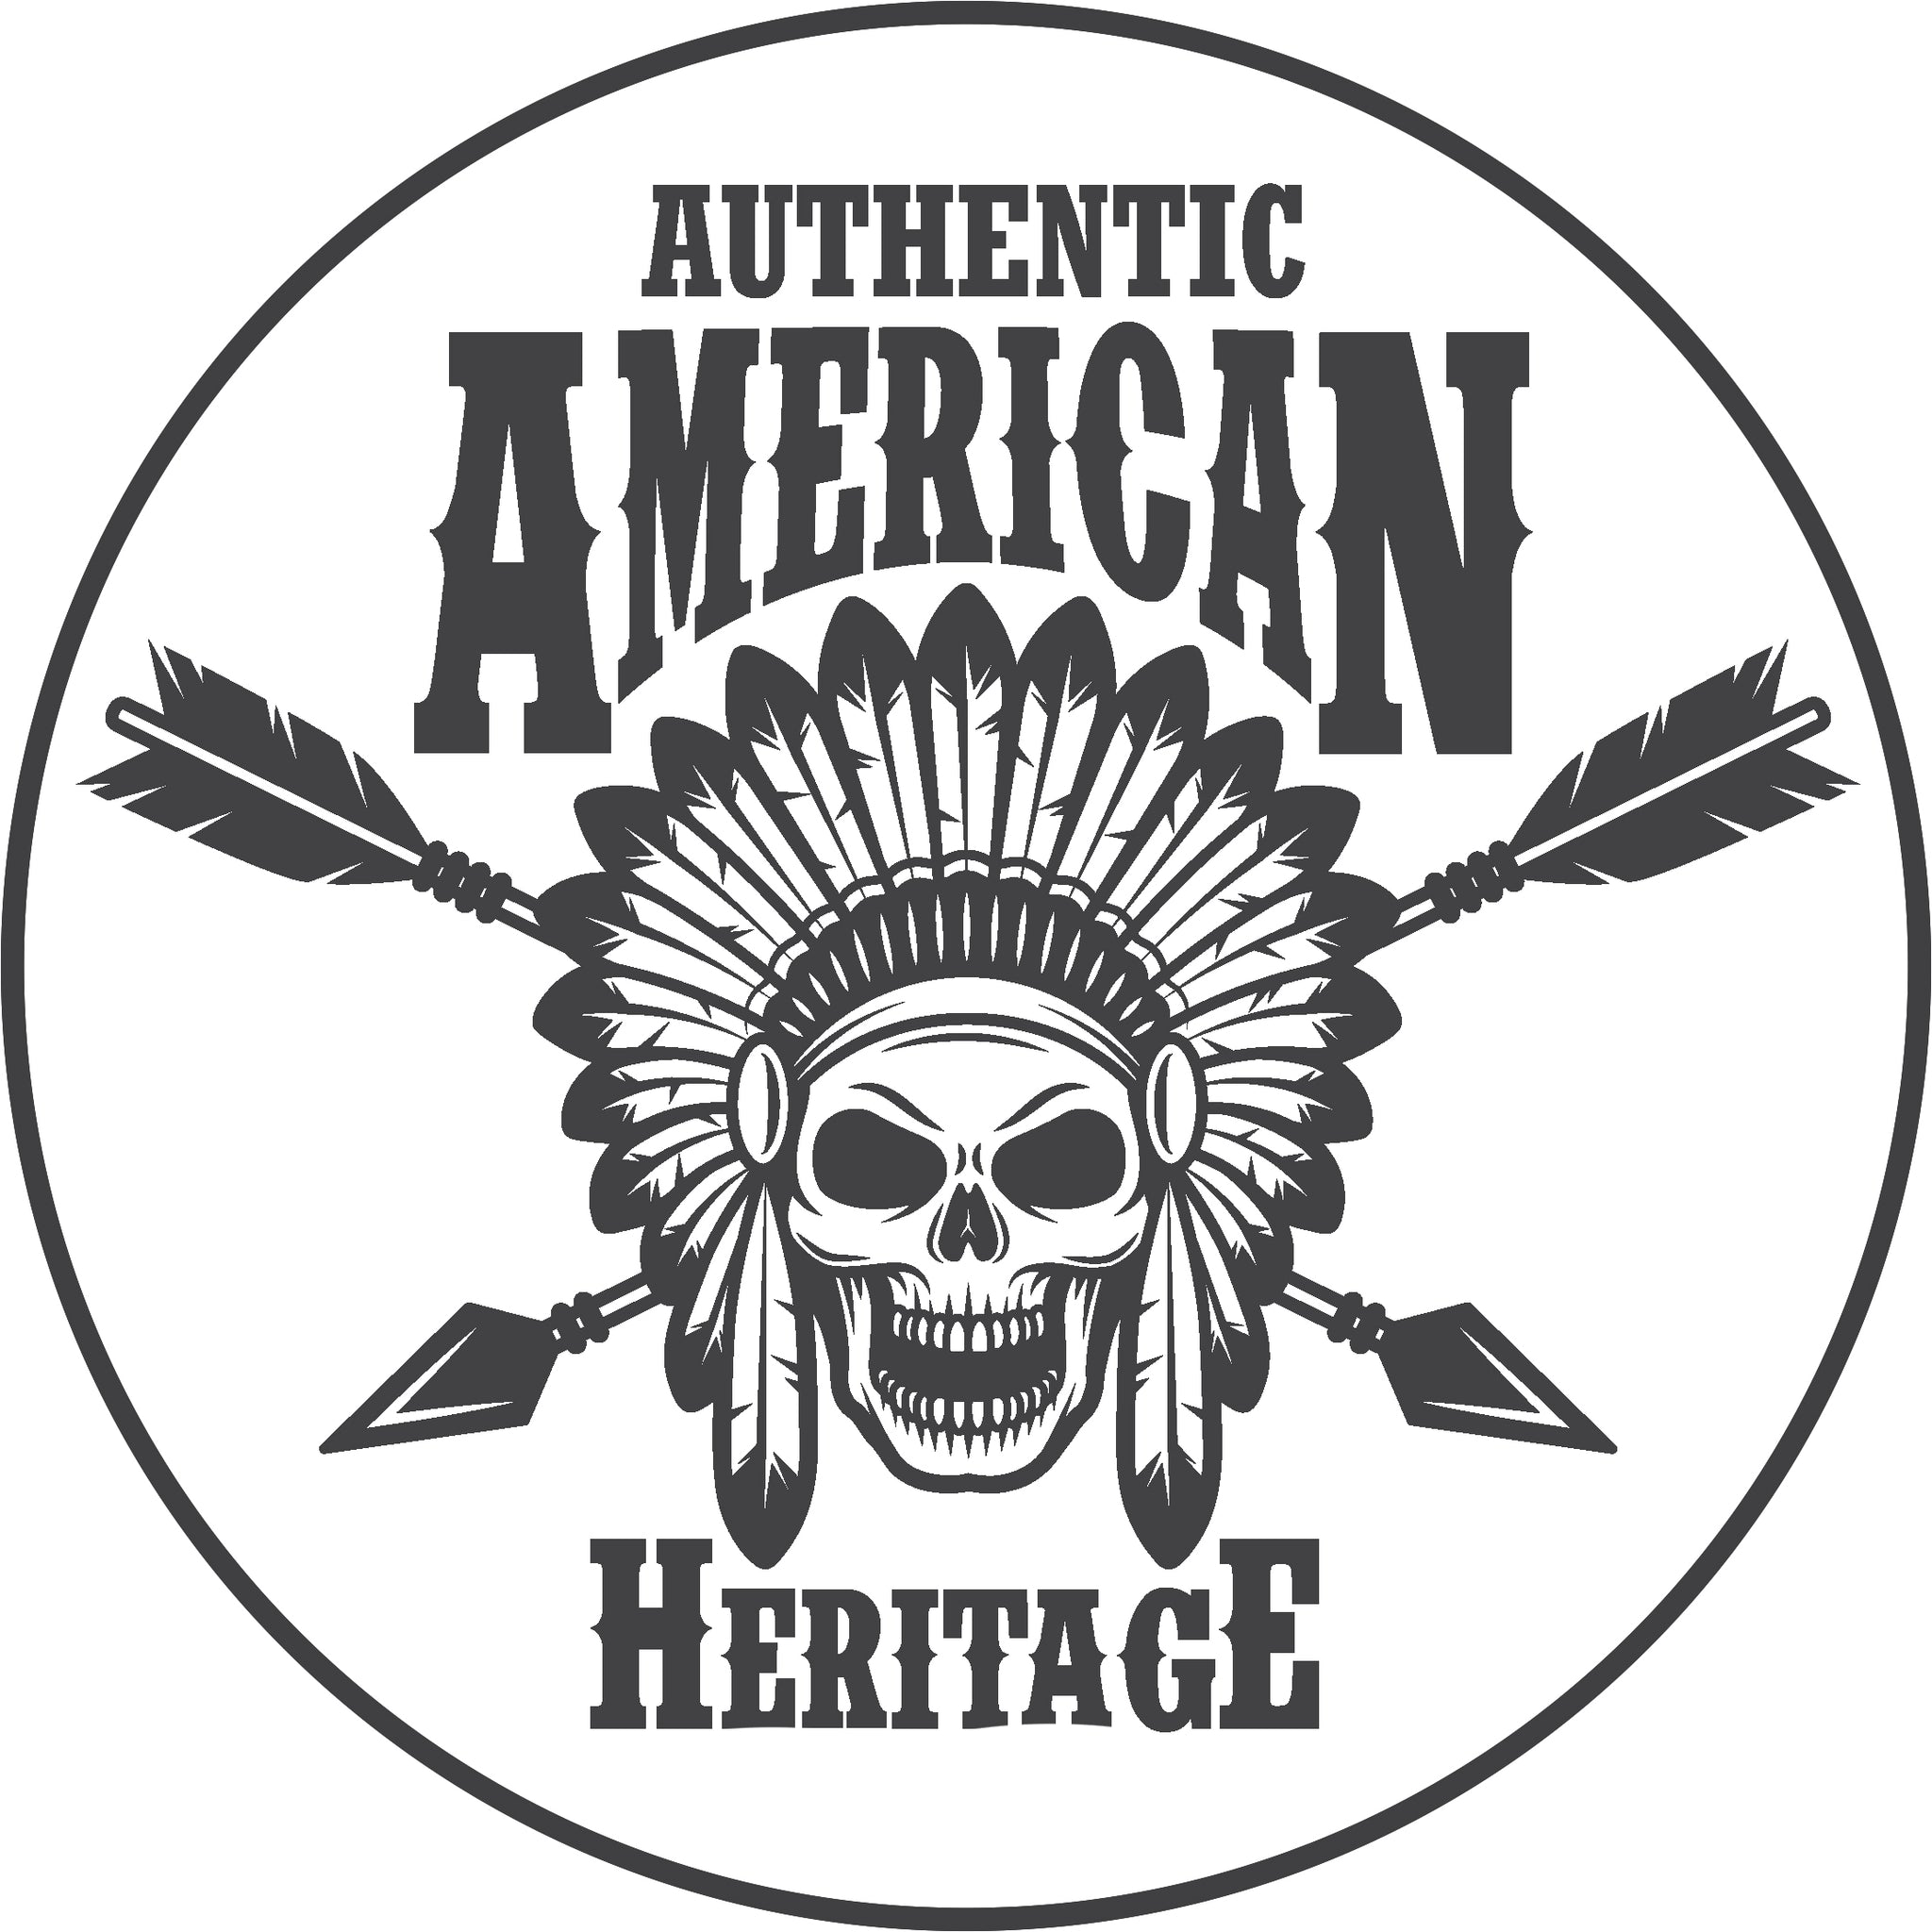 Cool Vintage Gray Cartoon Logo Icon - Authentic American Heritage Border Around Image As Shown Vinyl Sticker